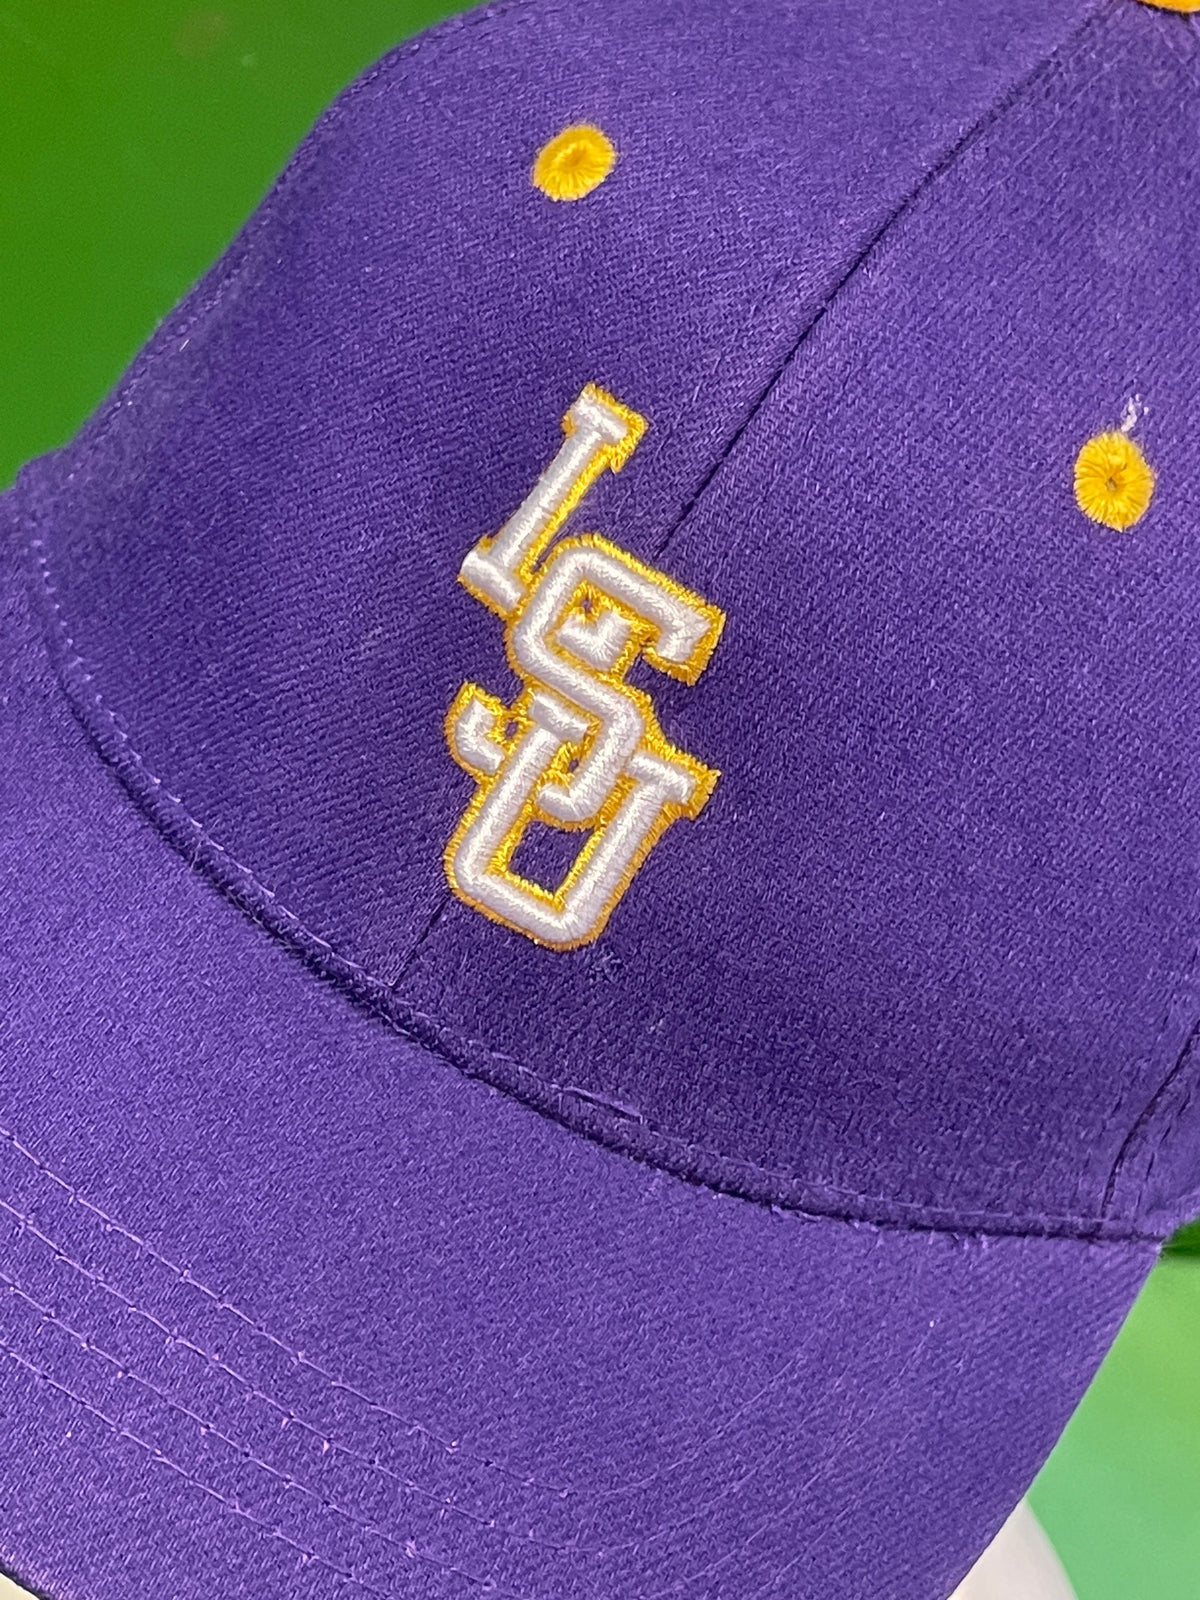 NCAA LSU Tigers Stretch Fit Hat/Cap Youth OSFM